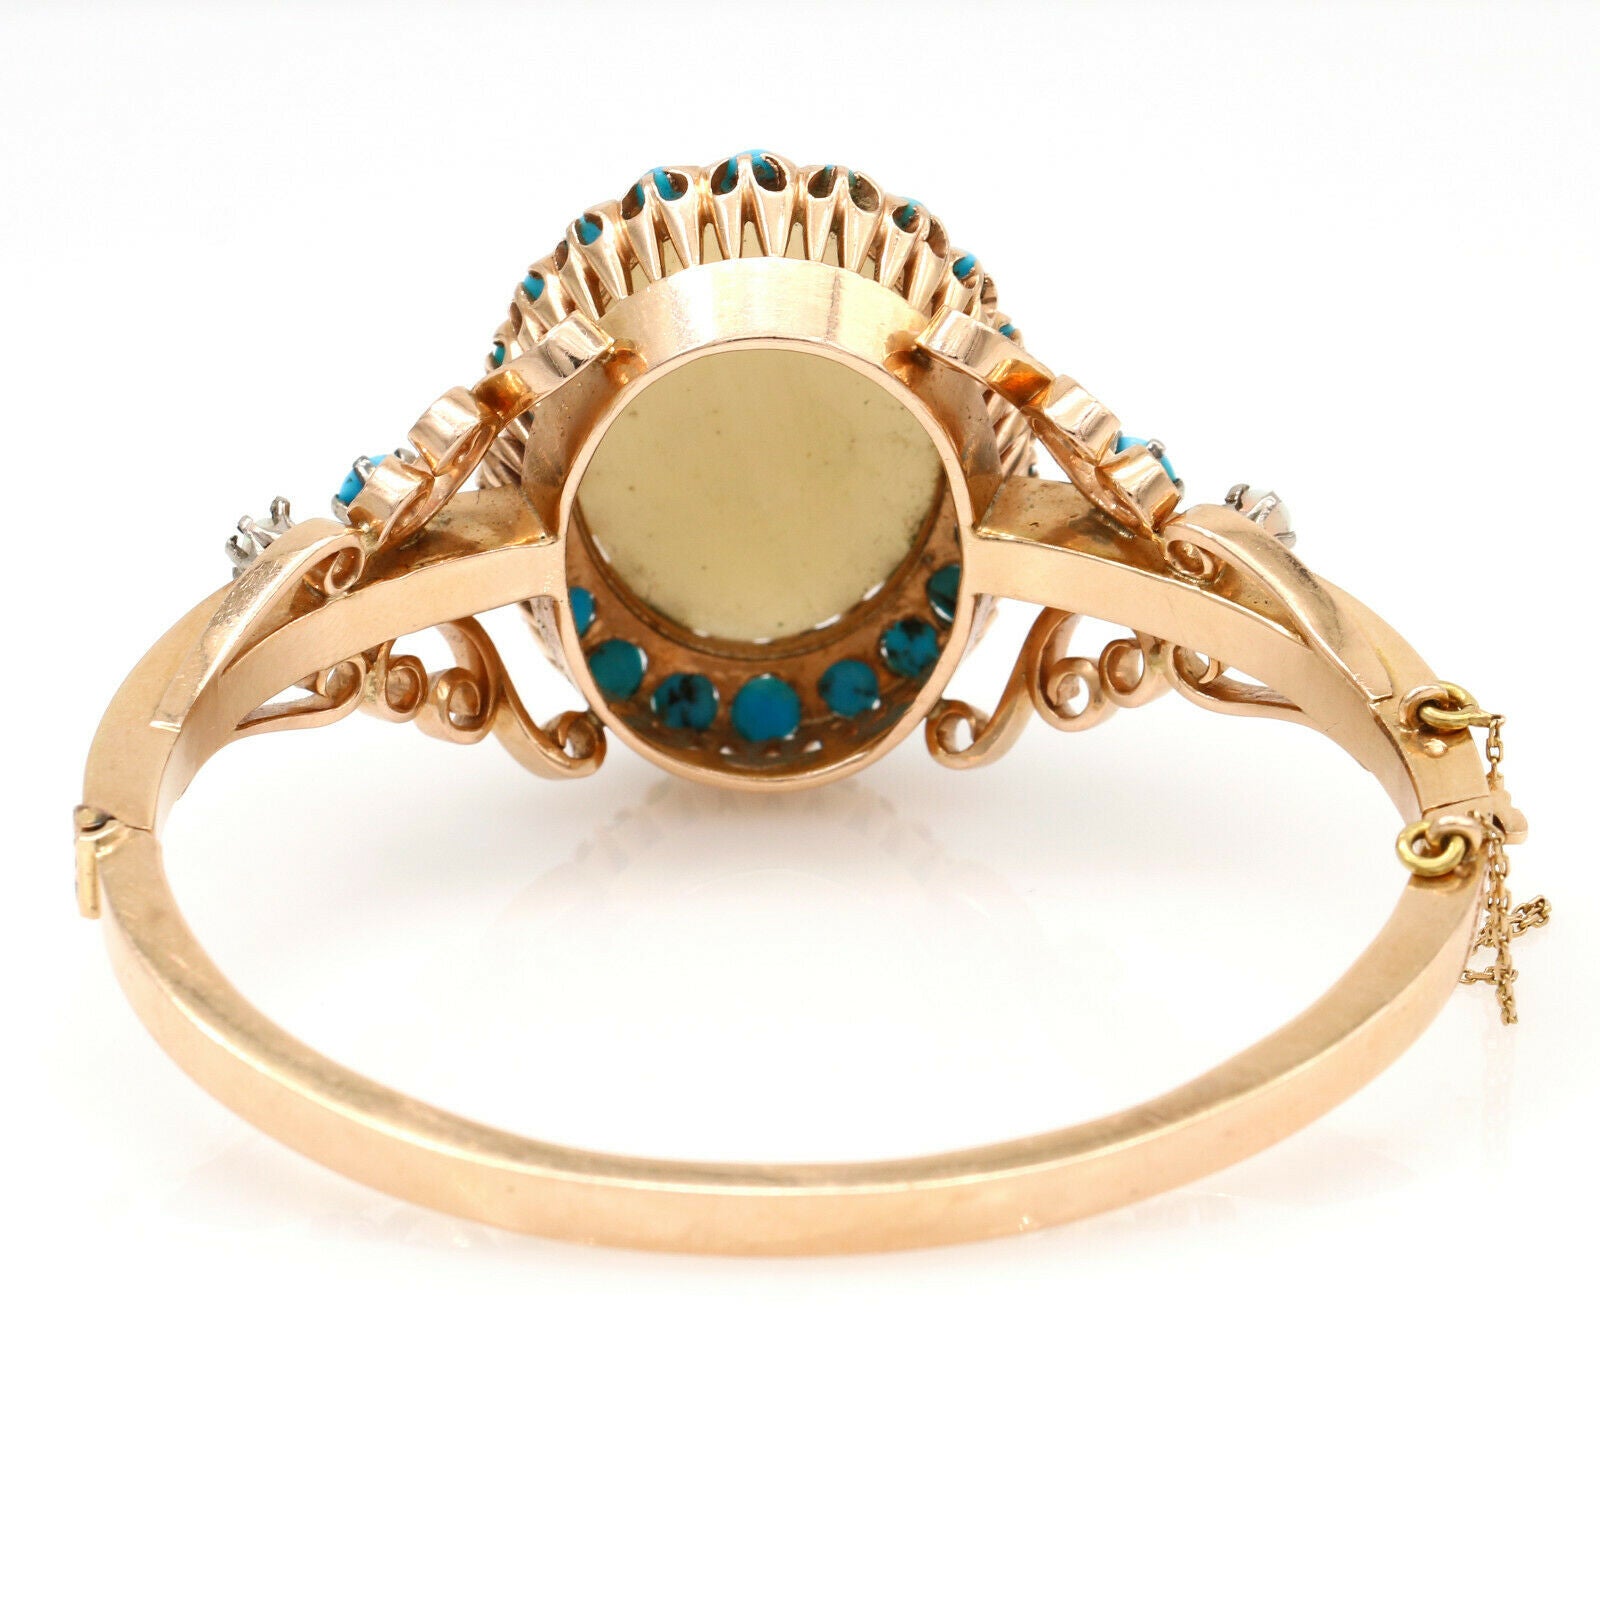 Opal and Turquoise Vintage Statement Bracelet in 14k Rose Gold